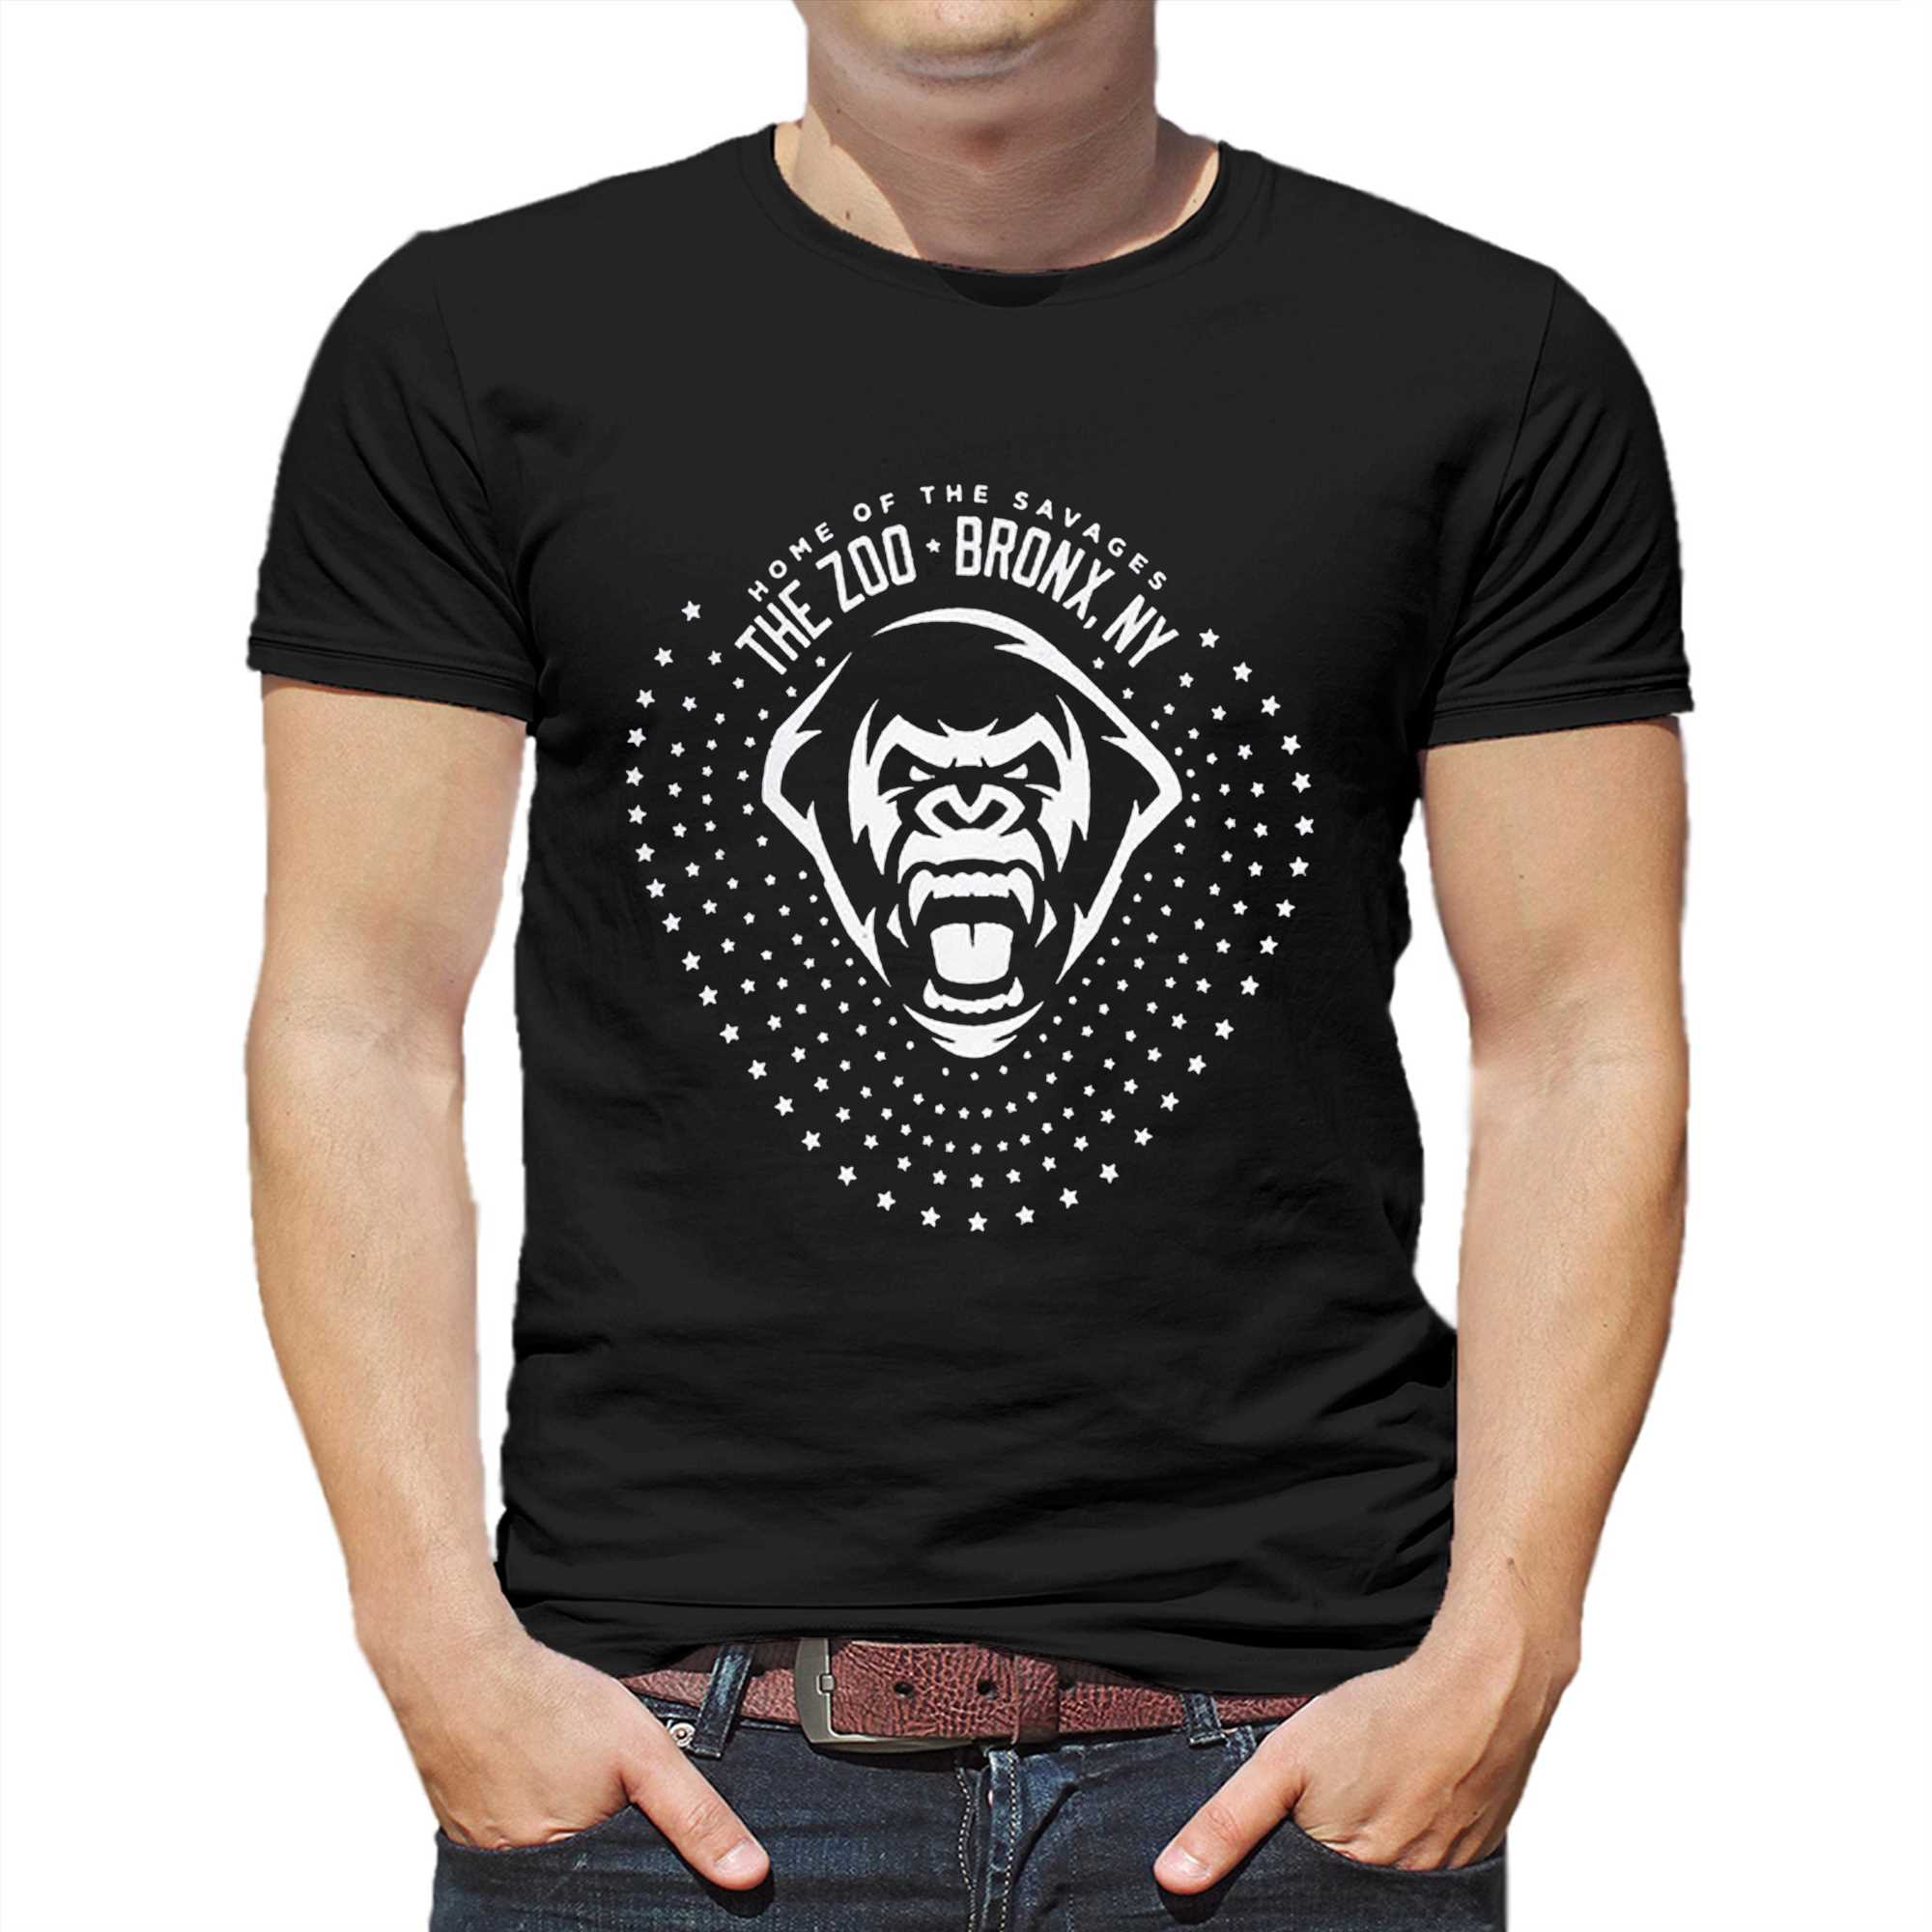 The Zoo T-shirt Bronx Ny - New York Yankees - Shibtee Clothing